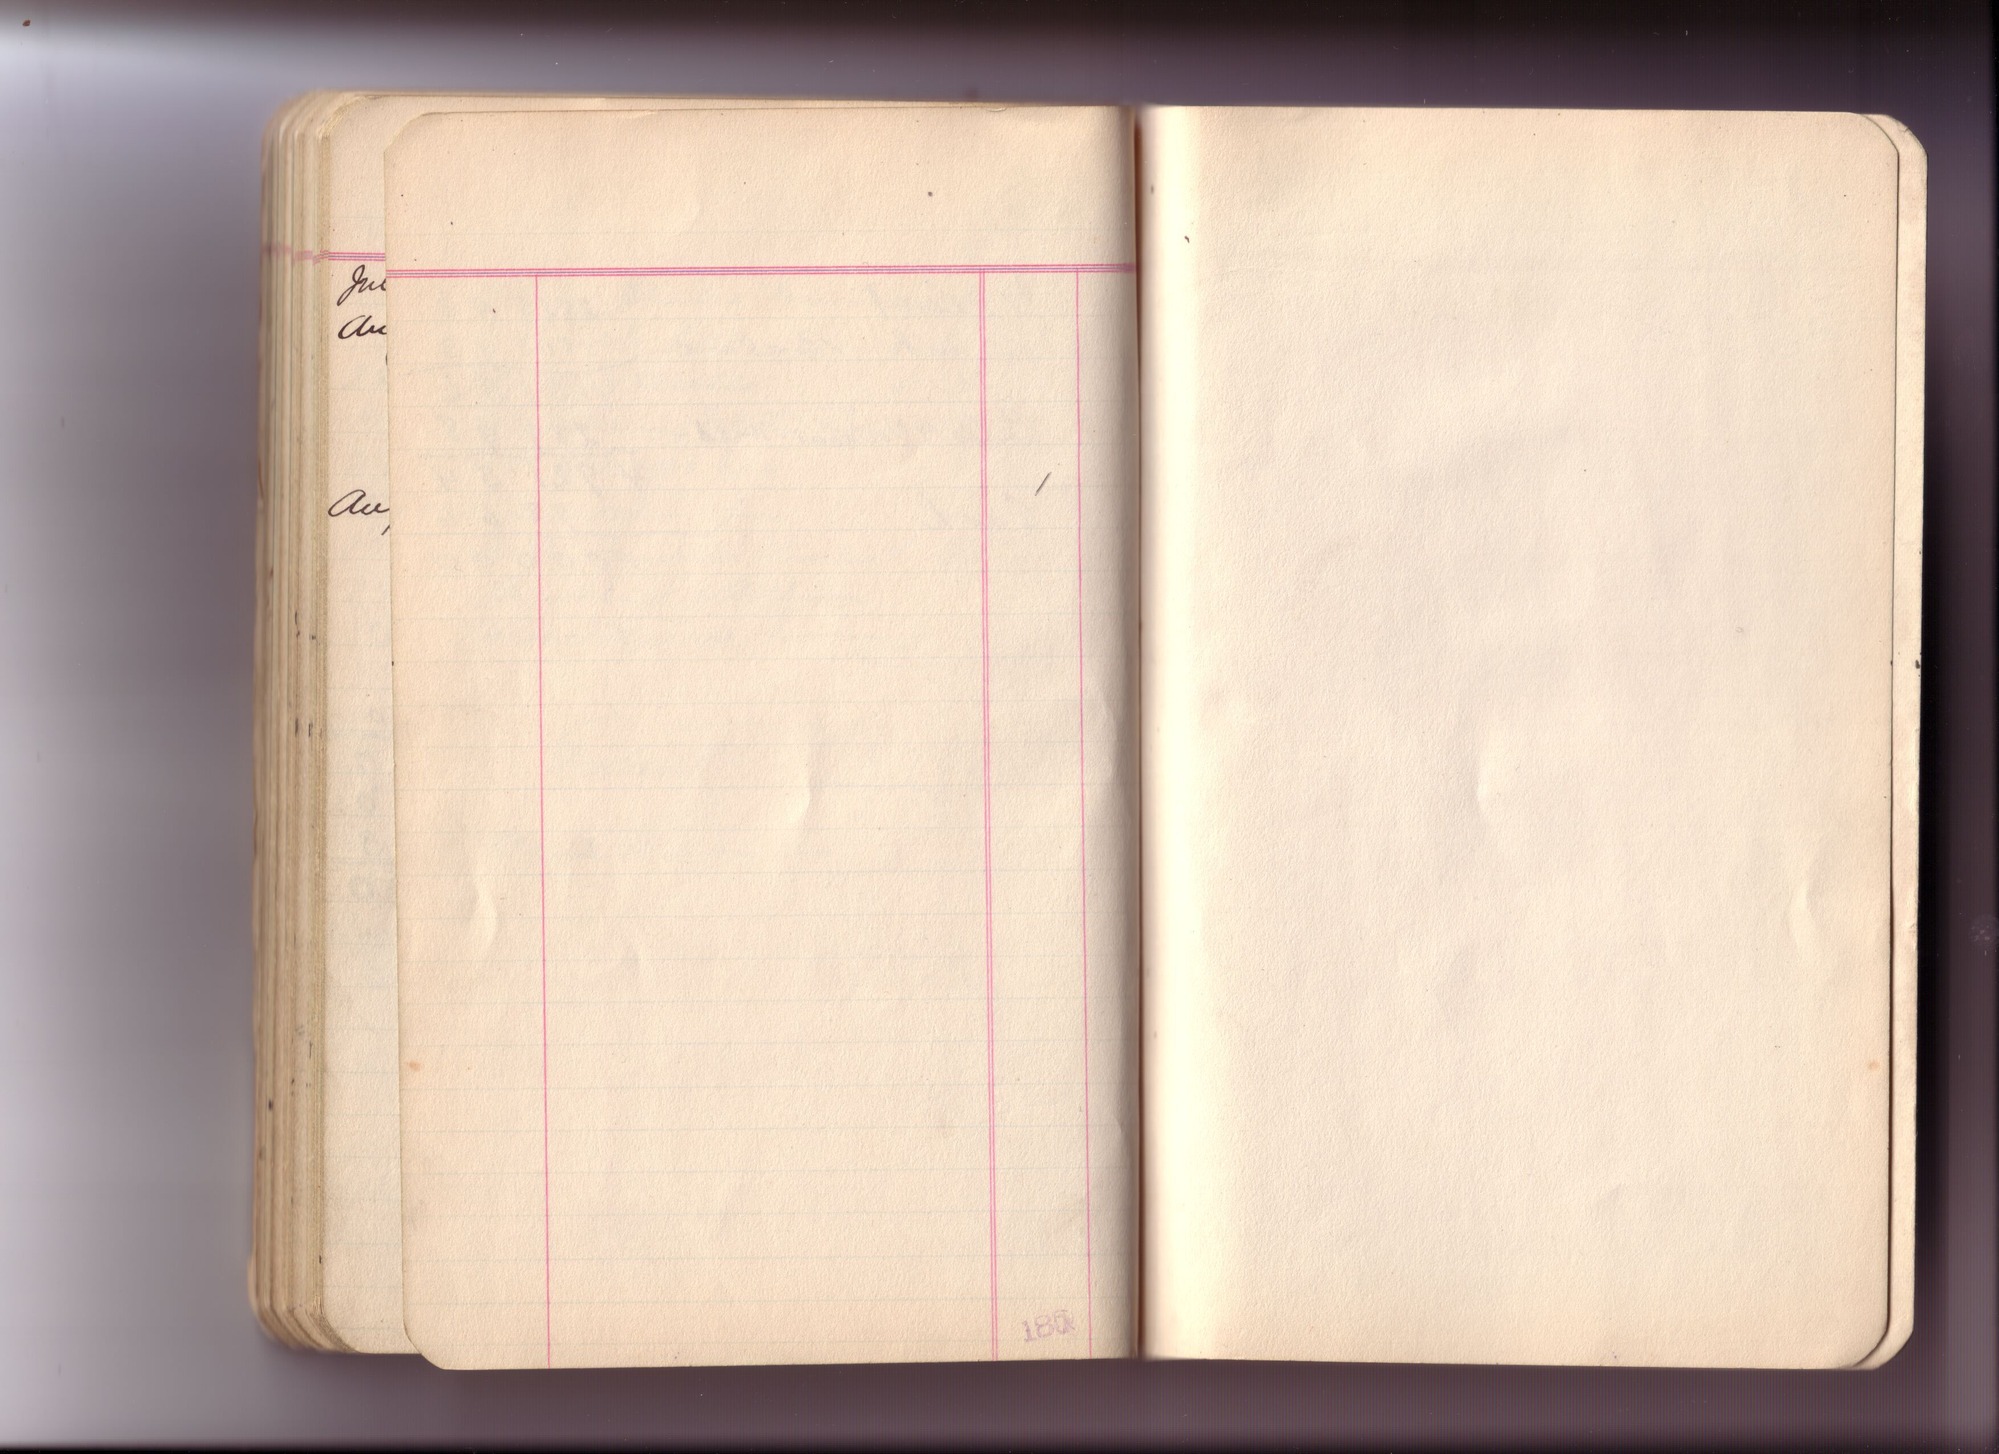 Thomas Edison's New York City Recording Studio Cash Book 07 (of 21), Image 48 (of 50).